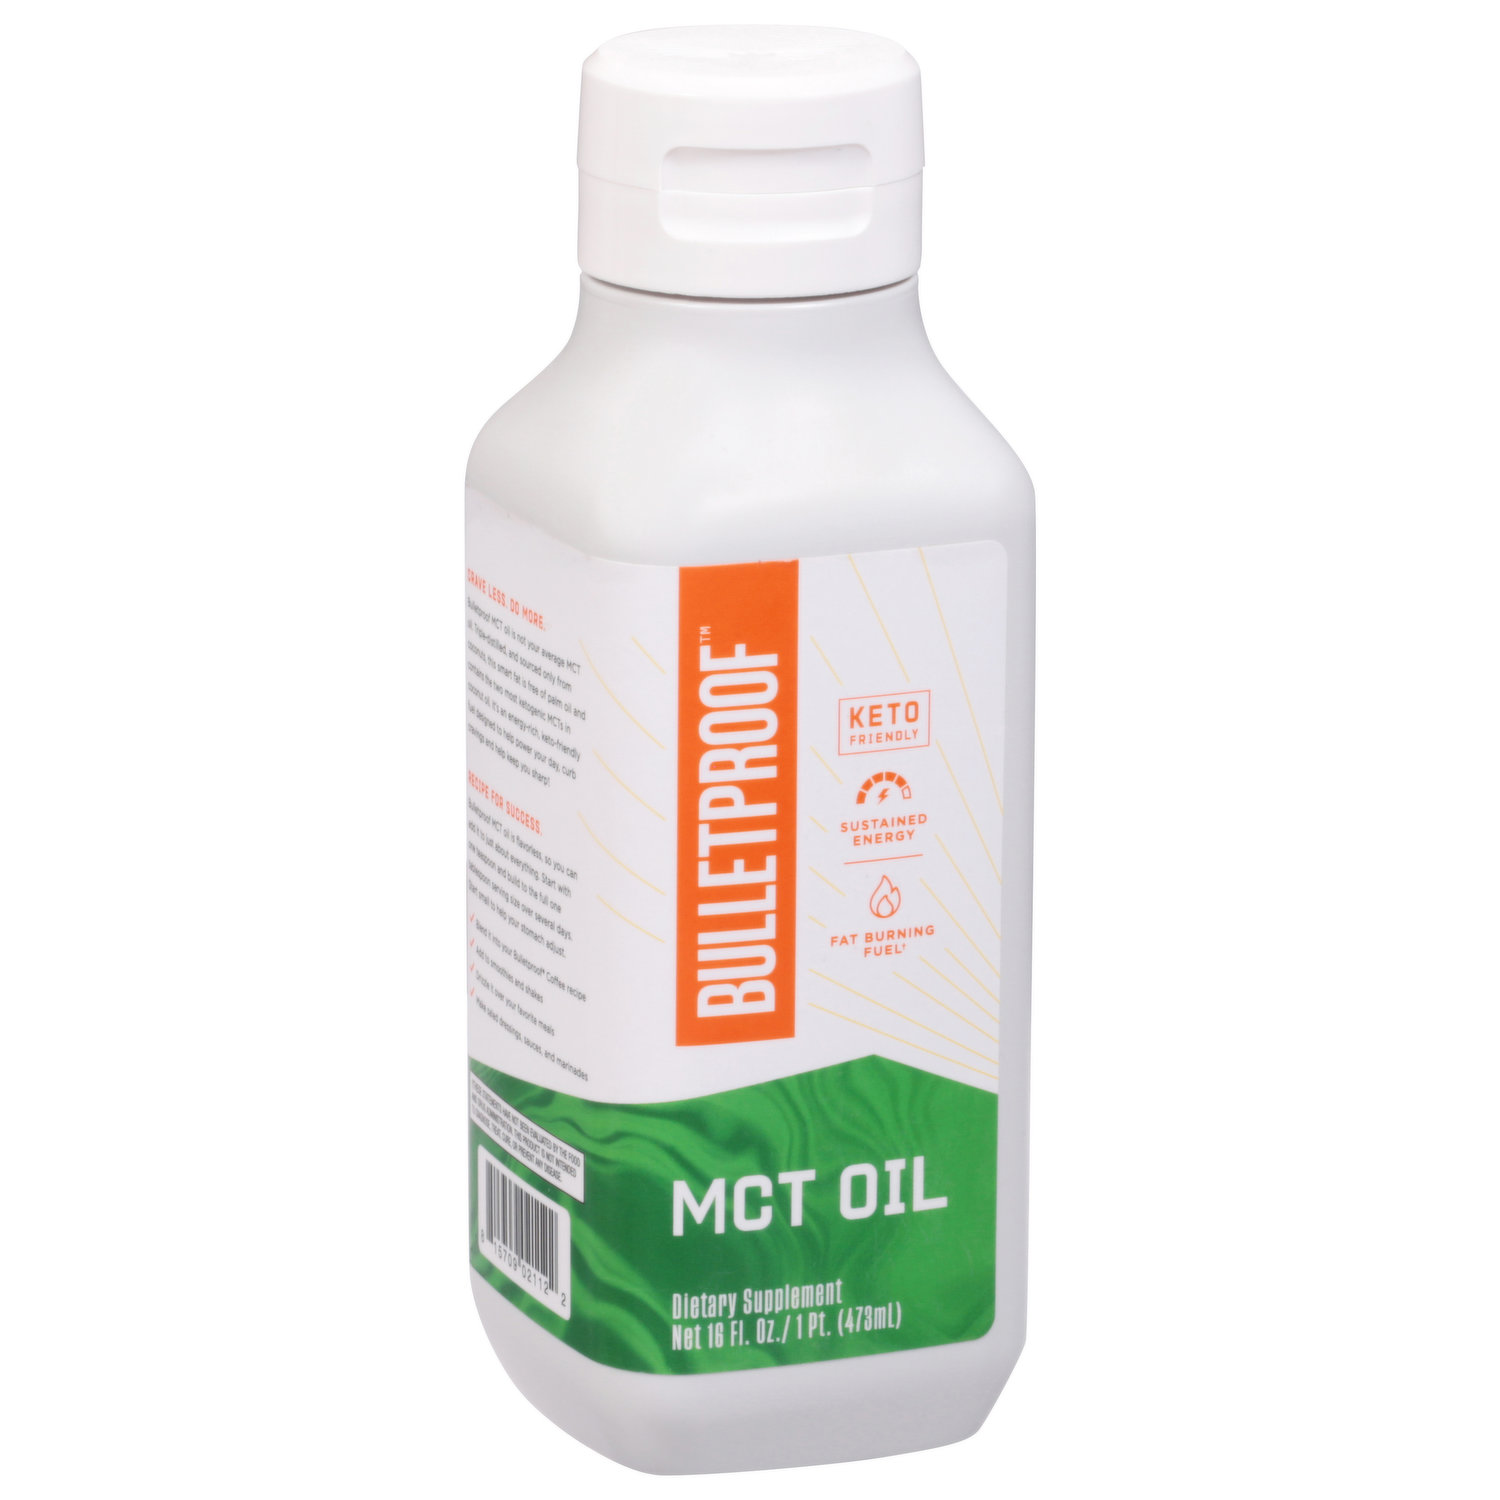 MCT Oil 32oz - PureBulk, Inc.